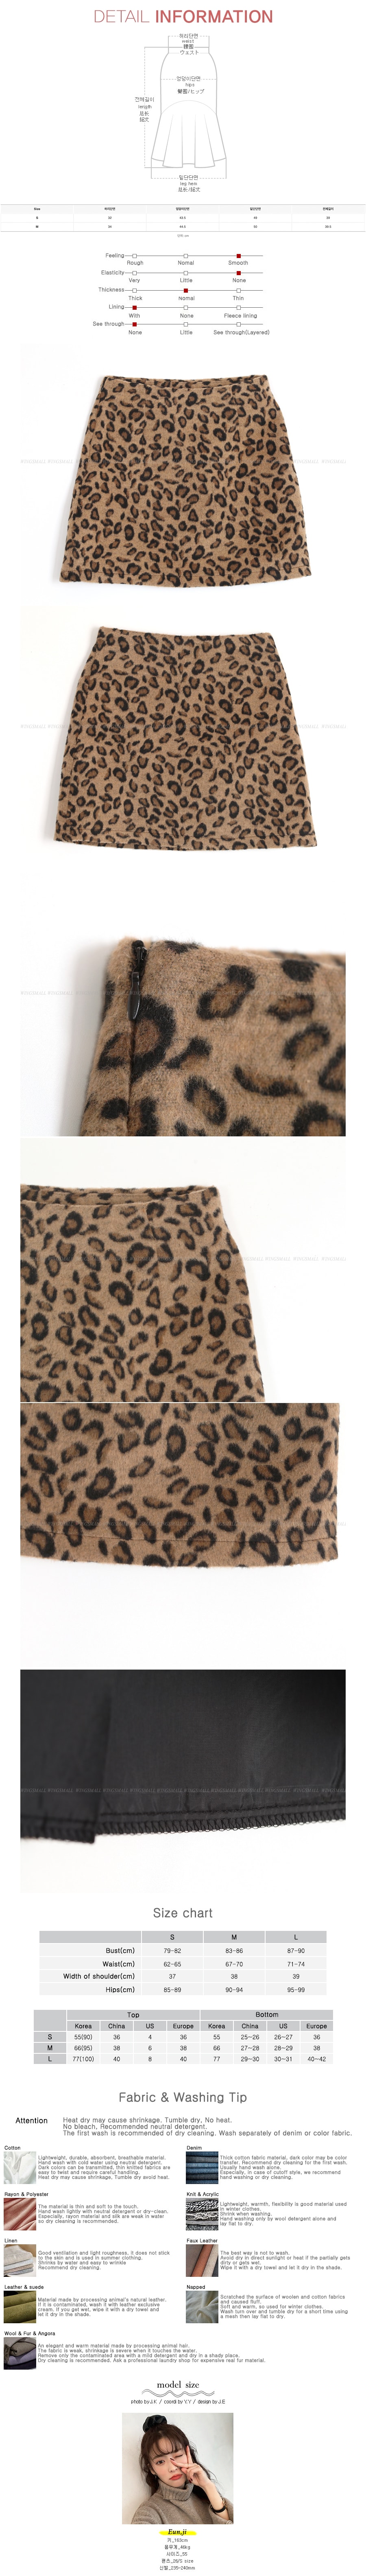 SSUMPART High Rise Leopard Mini Skirt #Brown S(25-26)